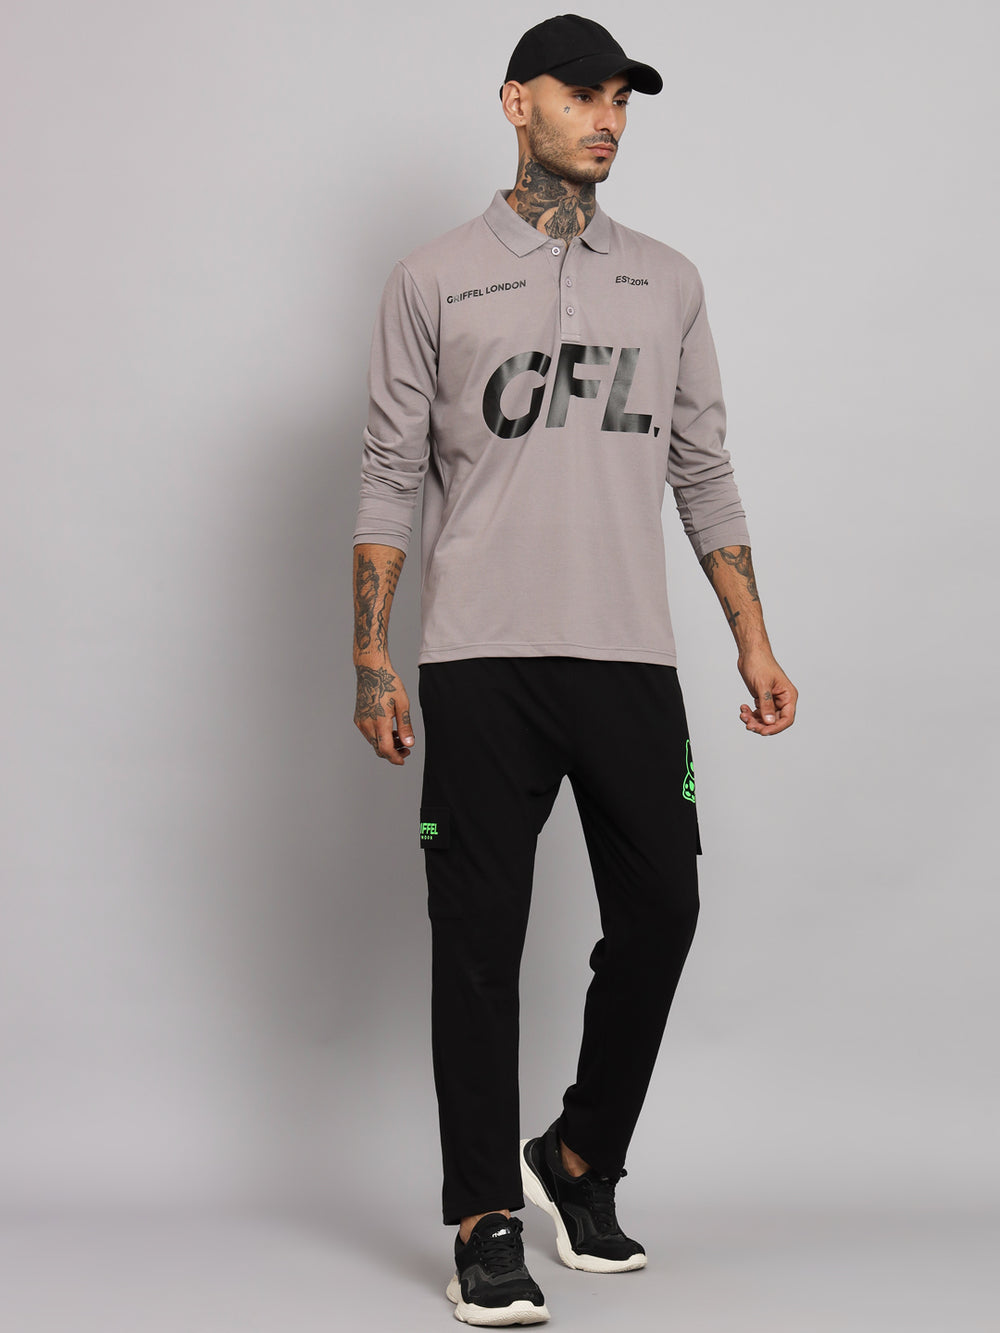 GRIFFEL Men's Steel Grey GFL Printed Cotton Full Sleeve Polo T-shirt - griffel